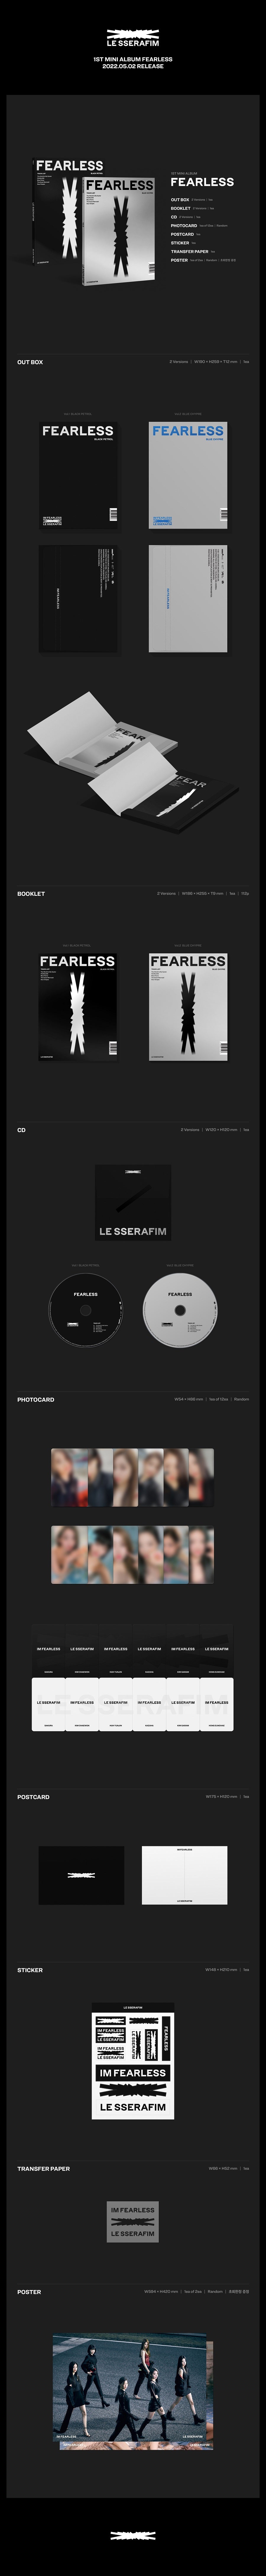 LE SSERAFIM Mini Album Vol. 1 - FEARLESS